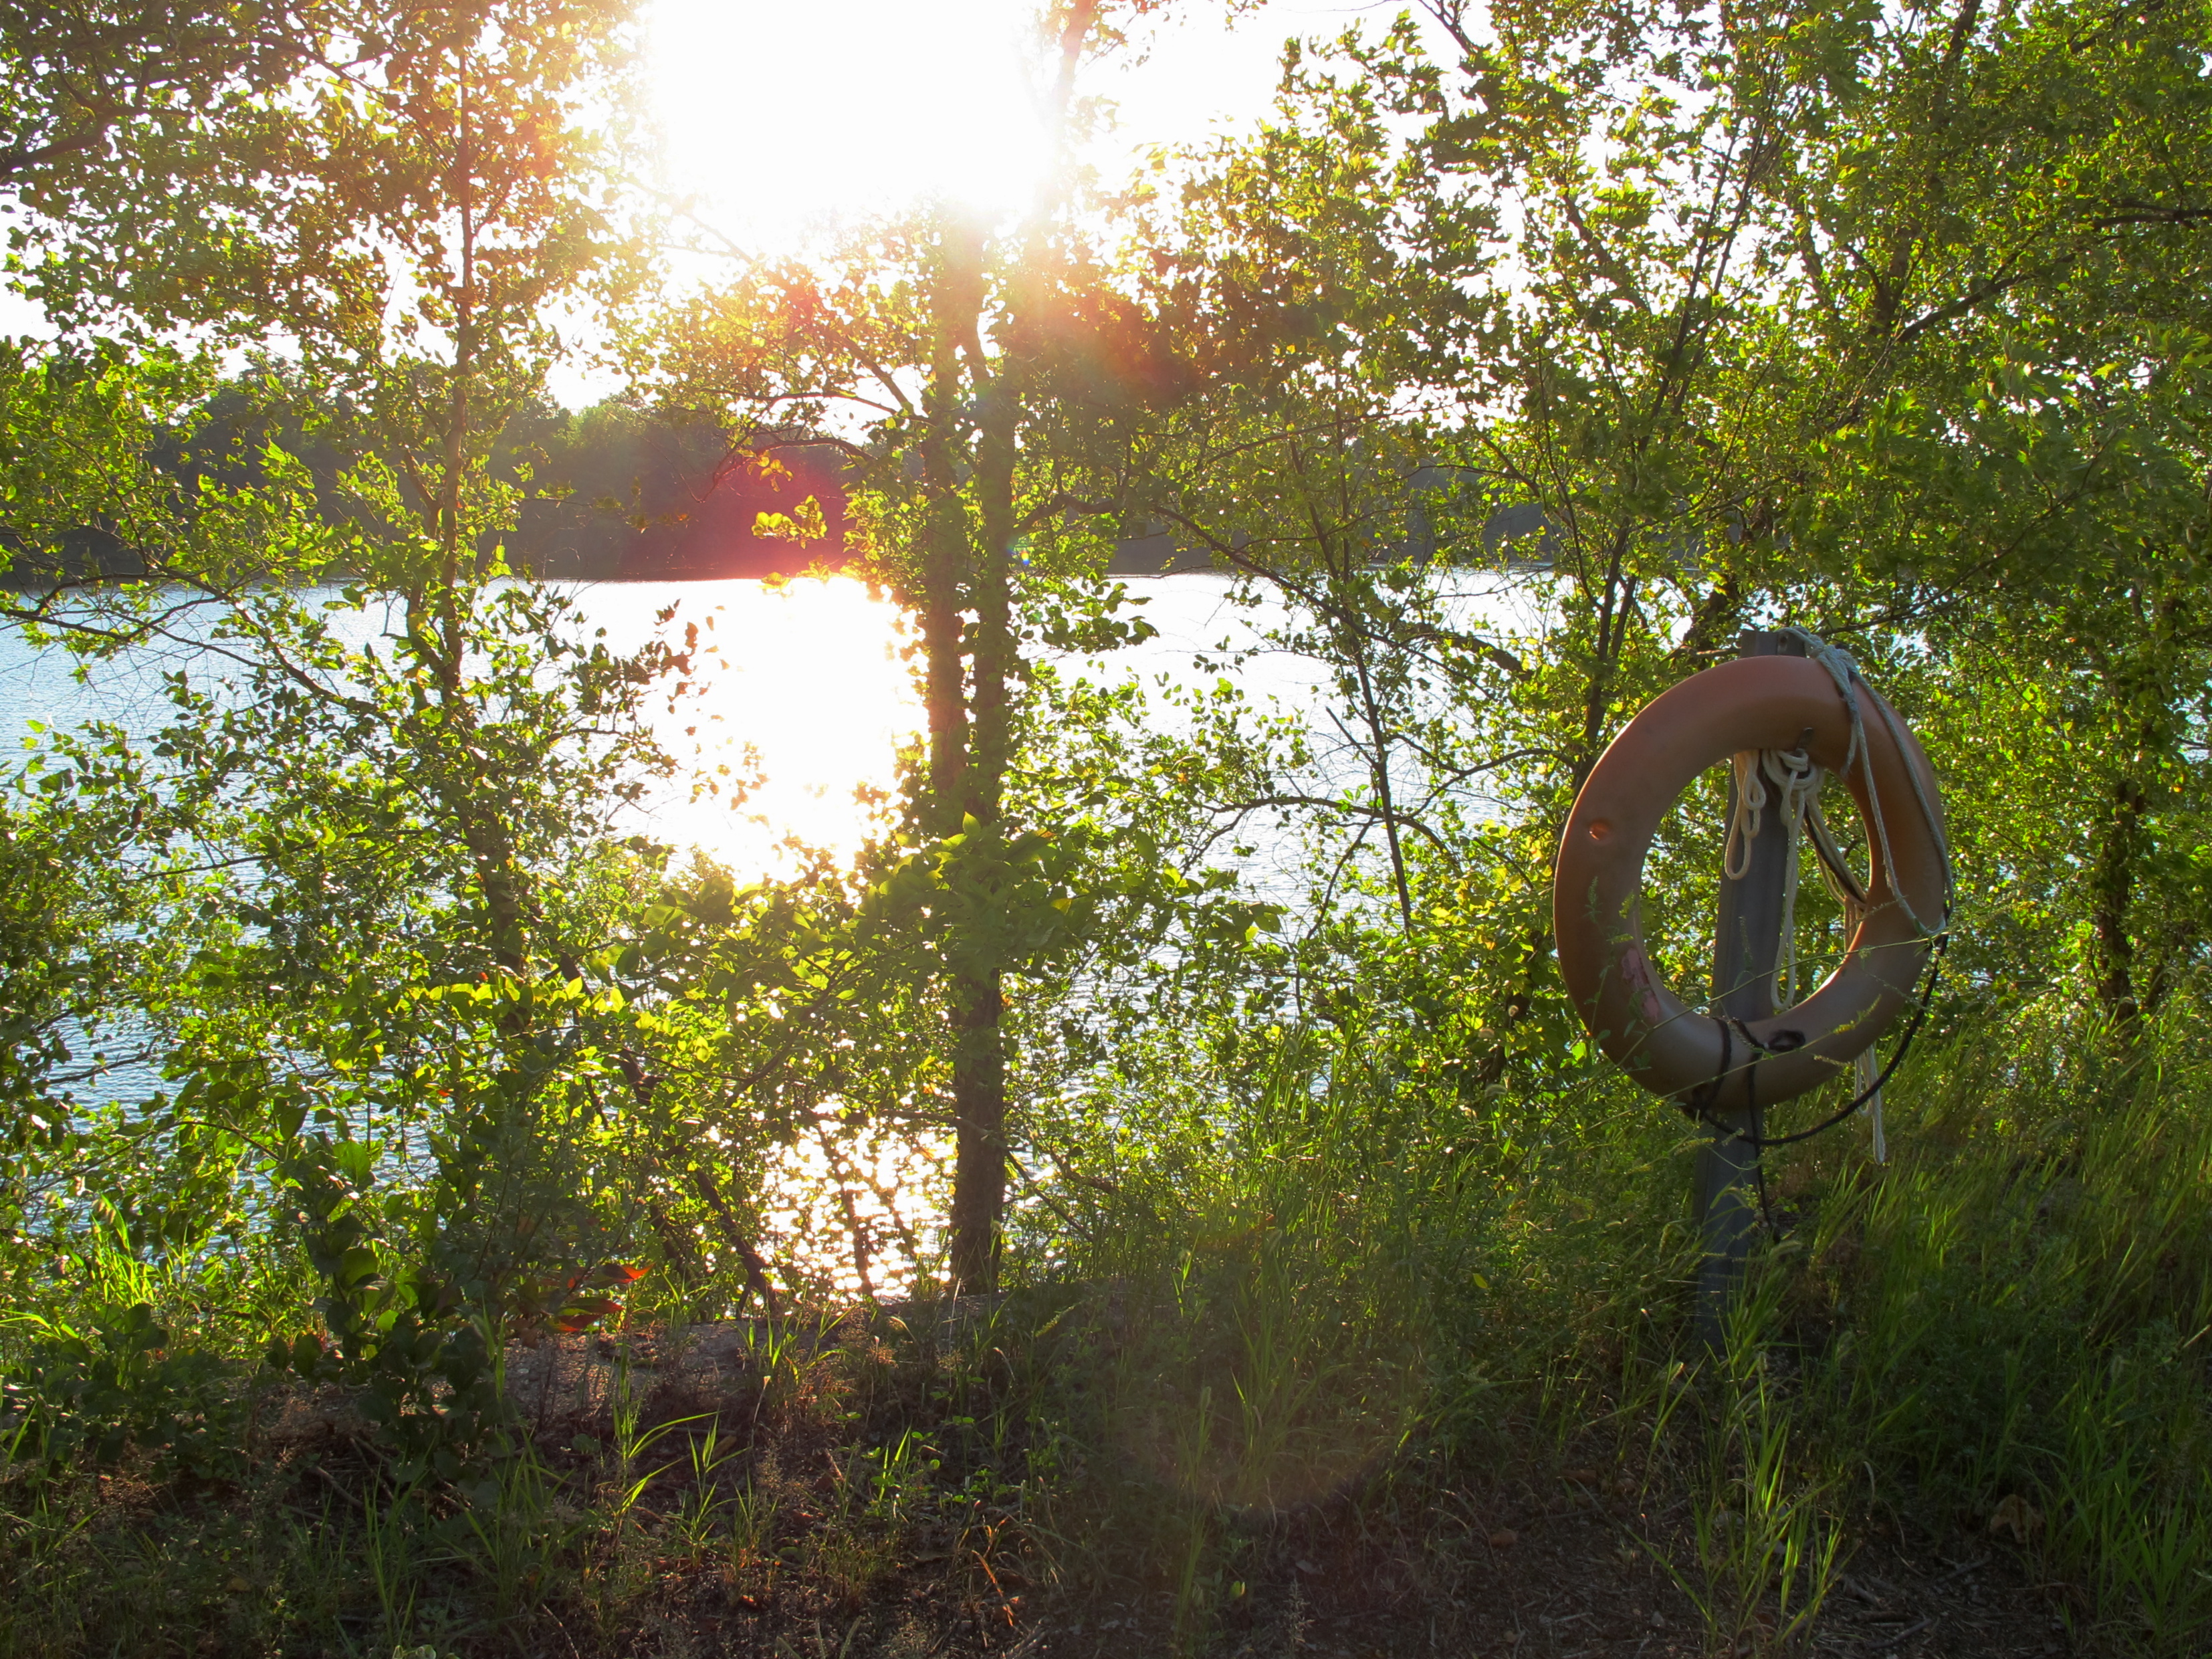 Golden hour, East Park Reservoir, August 2015